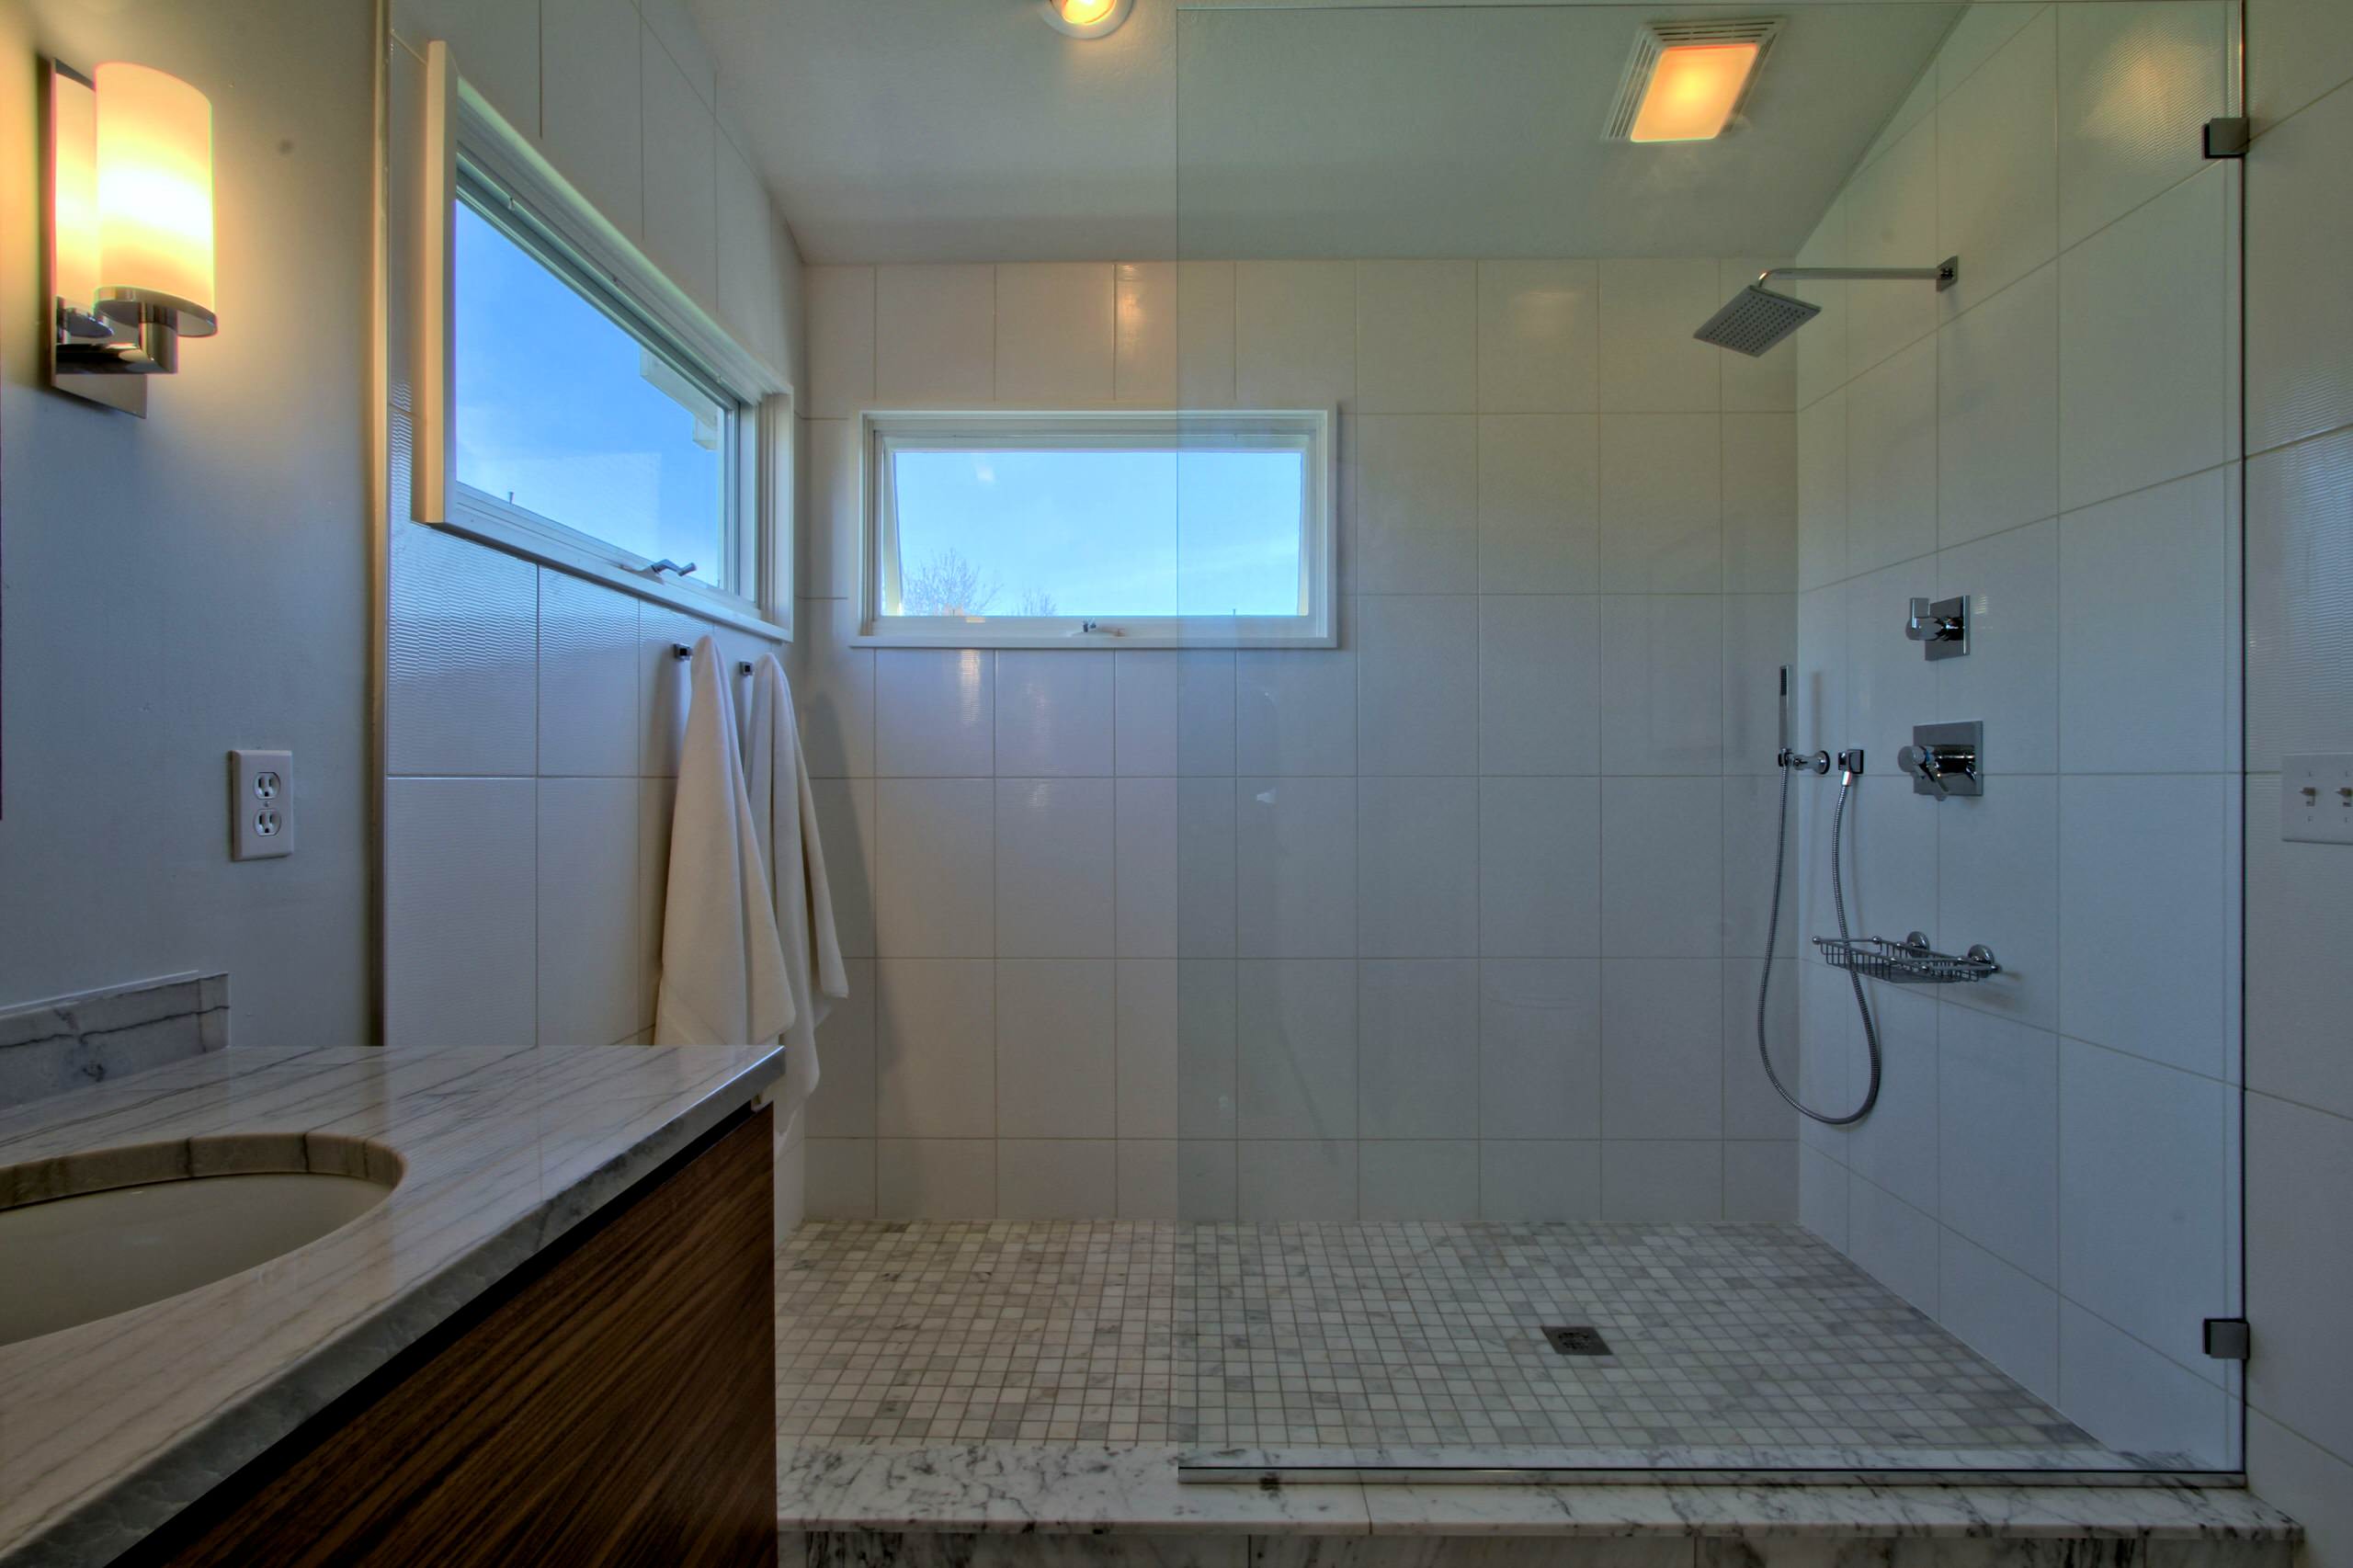 Window Inside Shower - Photos & Ideas | Houzz